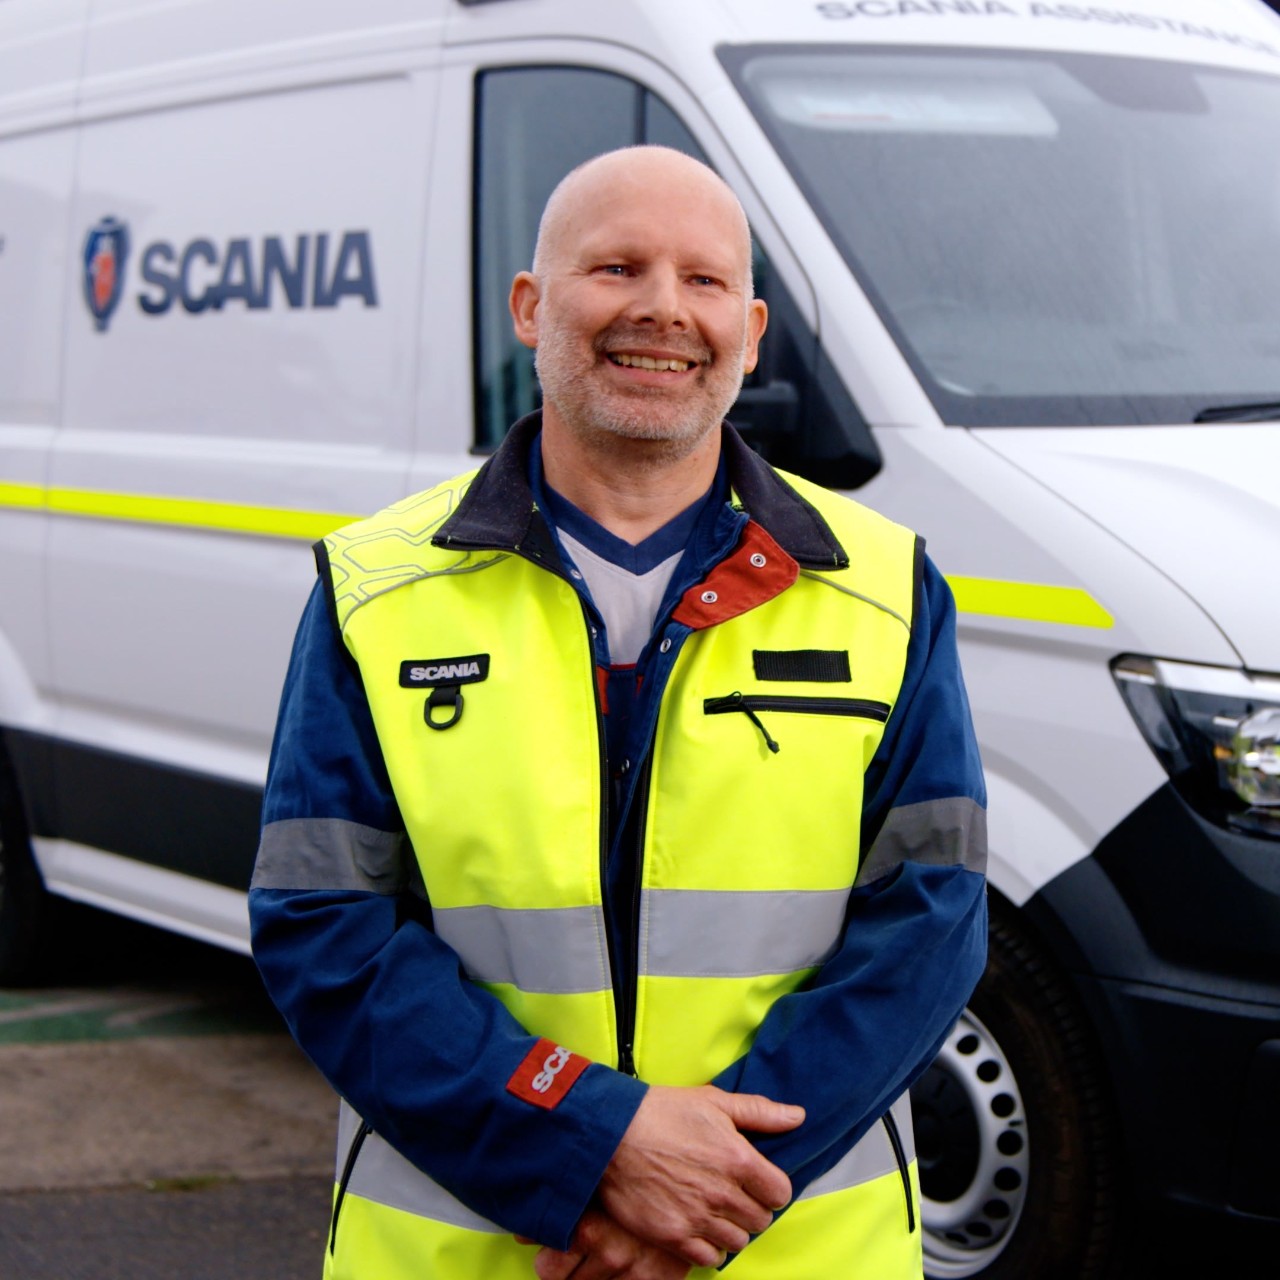 Scania Assistance technician, Elton Kellow